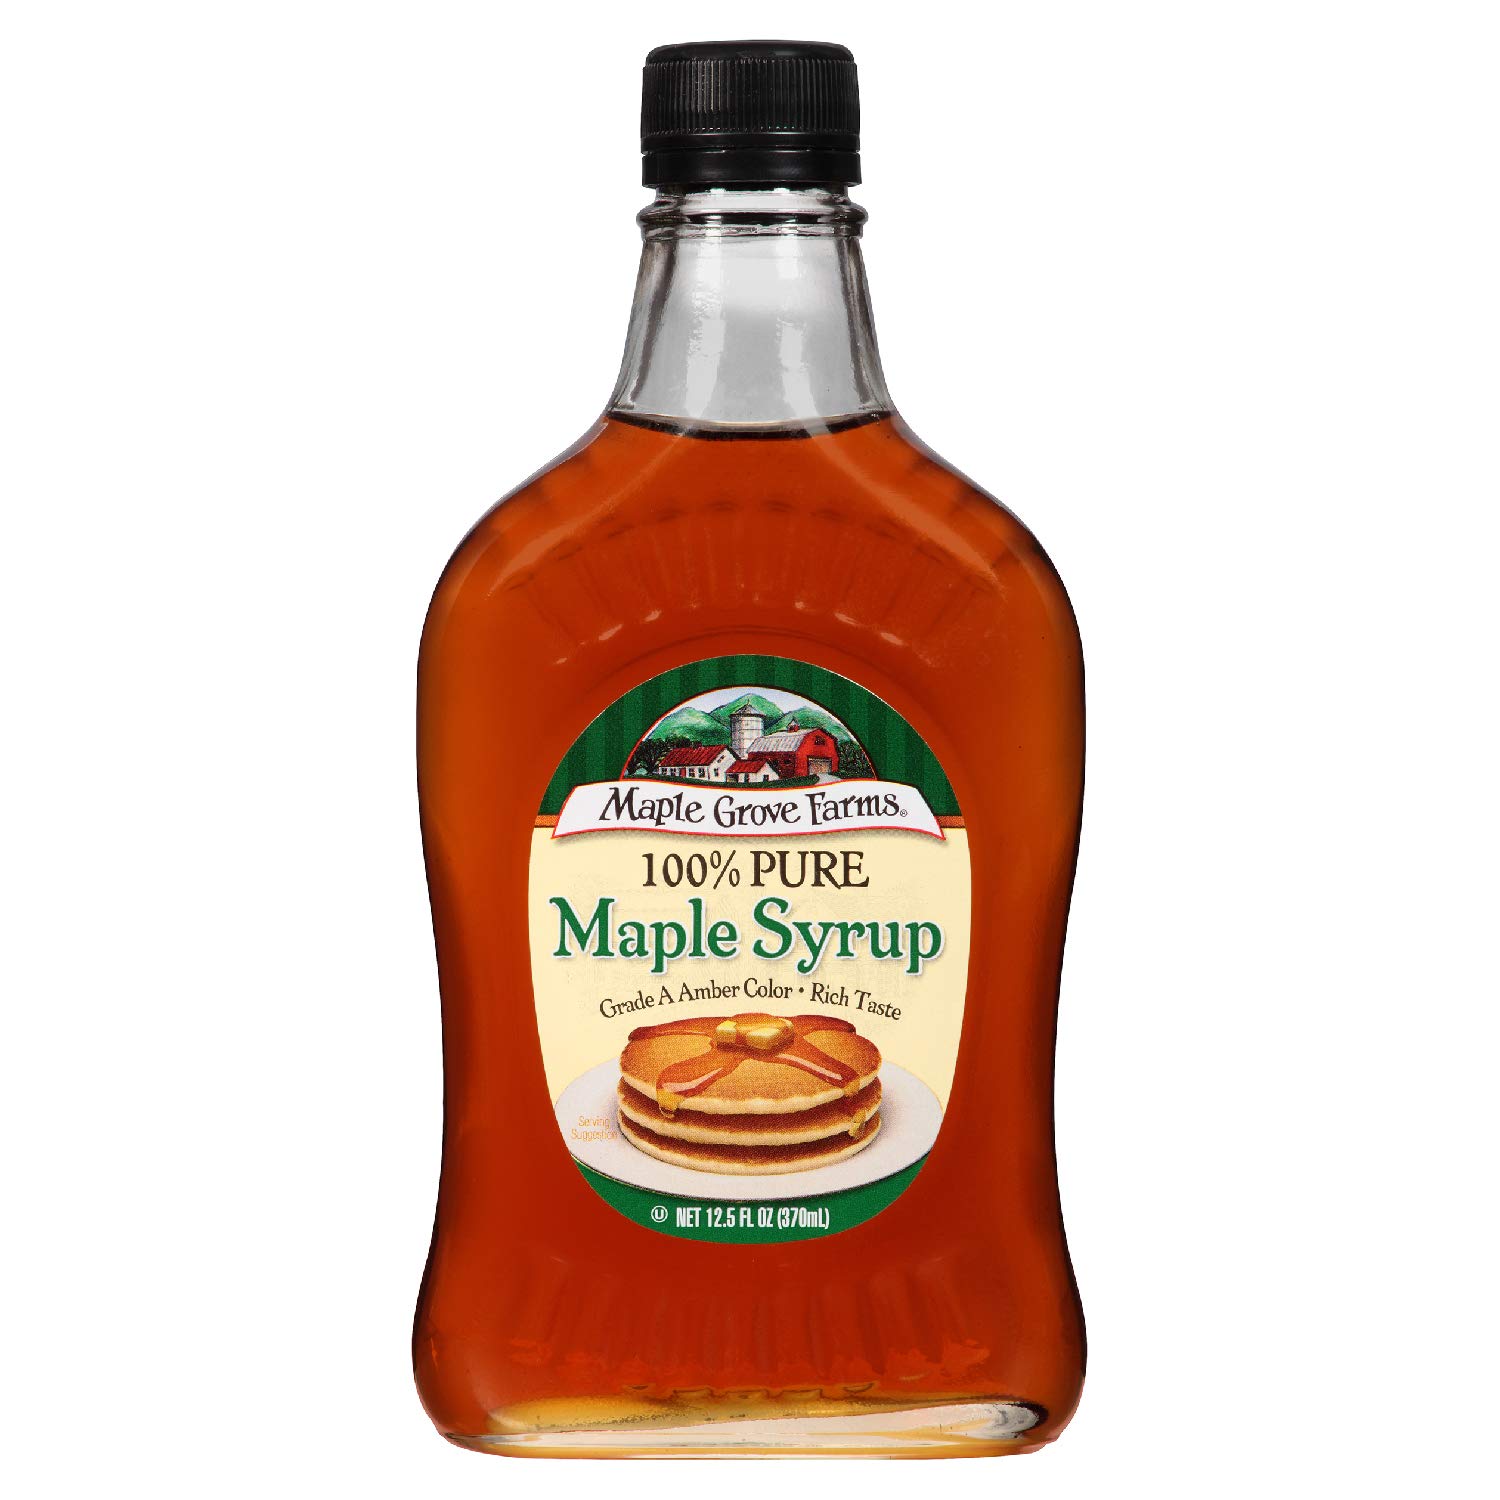 Maple Grove Farms Pure Maple Syrup, 12.5 Oz $6.63